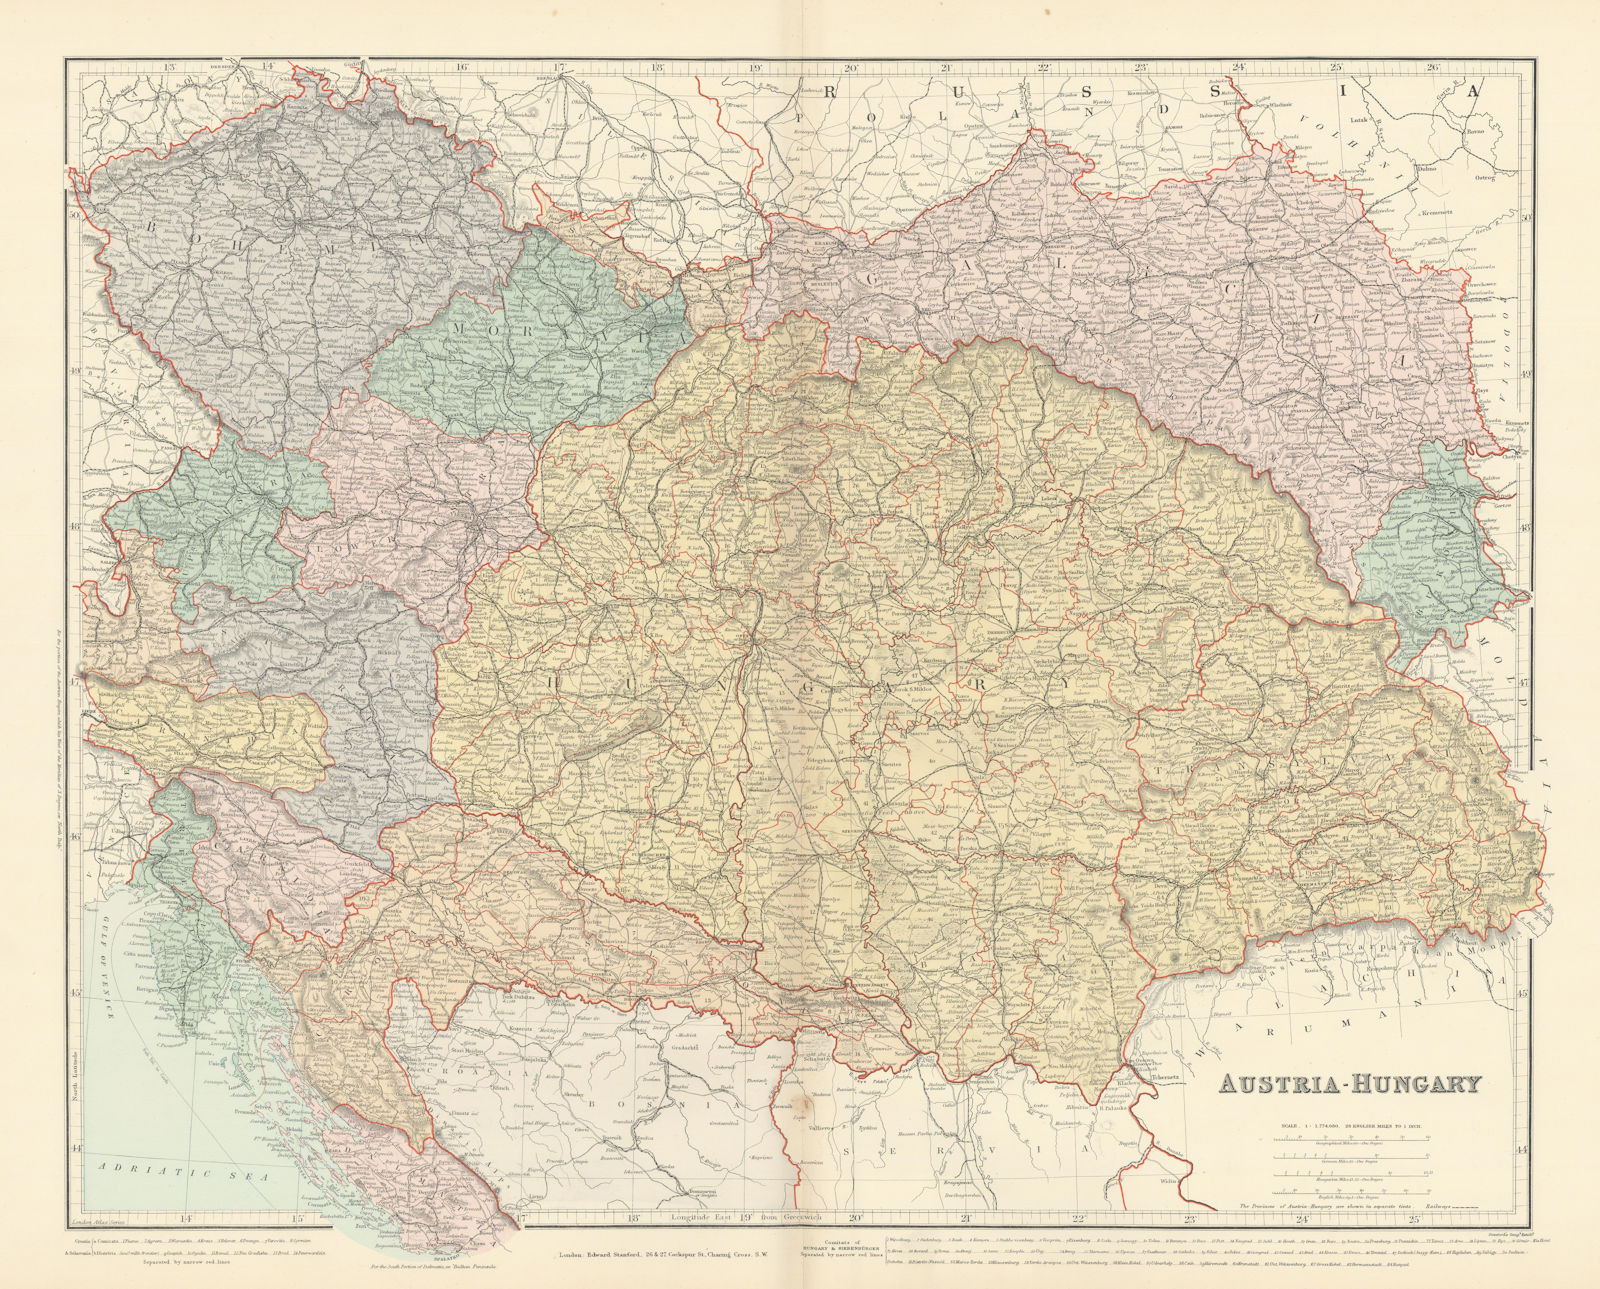 Associate Product Austria-Hungary. Croatia Czechia Bohemia Galicia Transylvania. STANFORD 1896 map